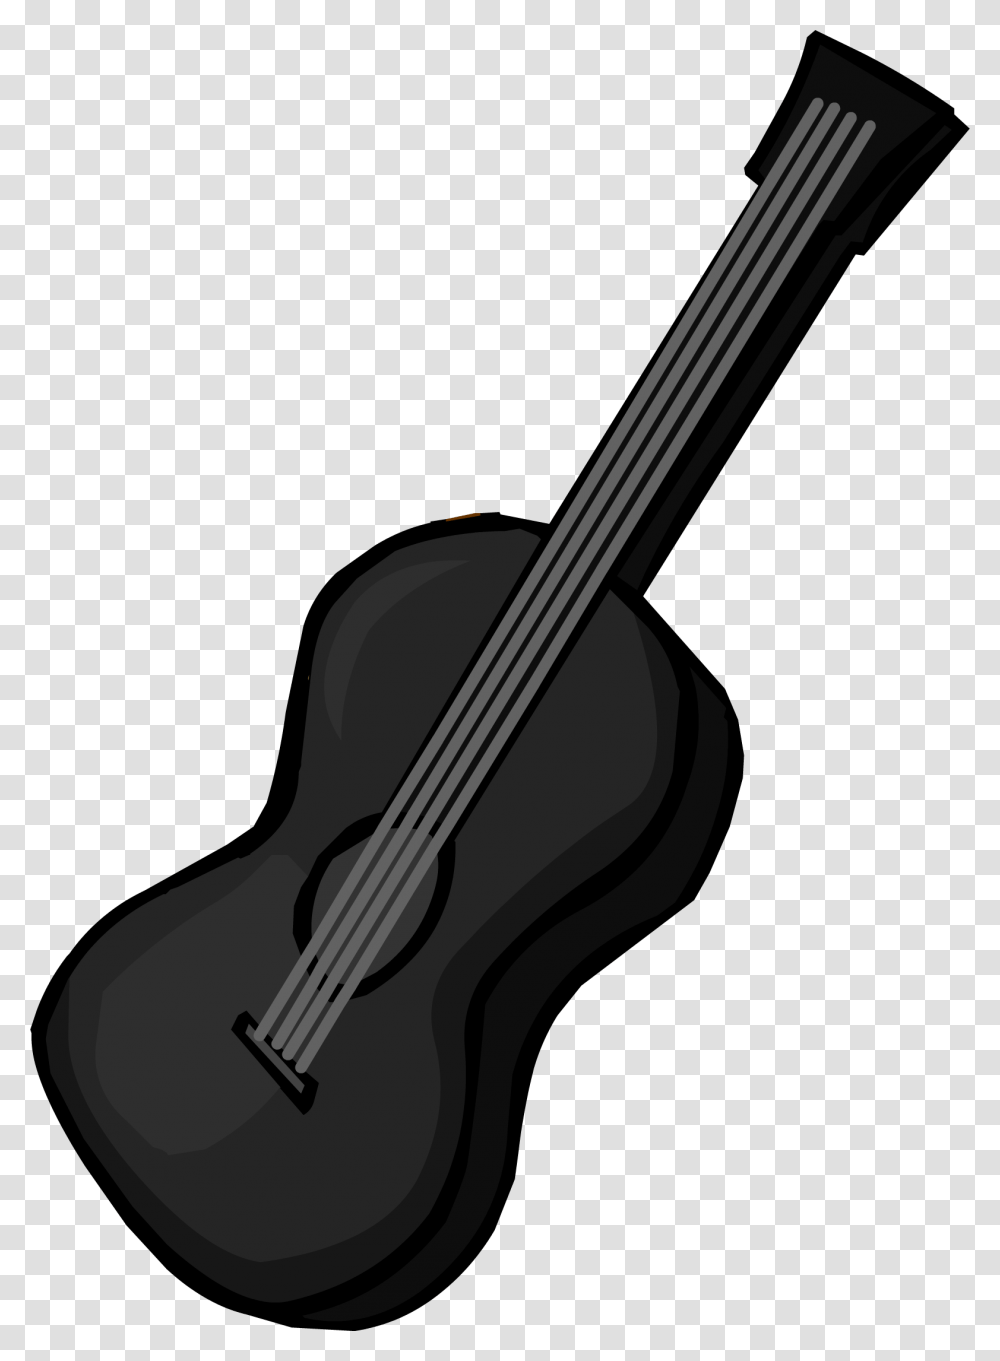 Club Penguin Rewritten Wiki Electric Guitar, Leisure Activities, Musical Instrument, Violin, Viola Transparent Png